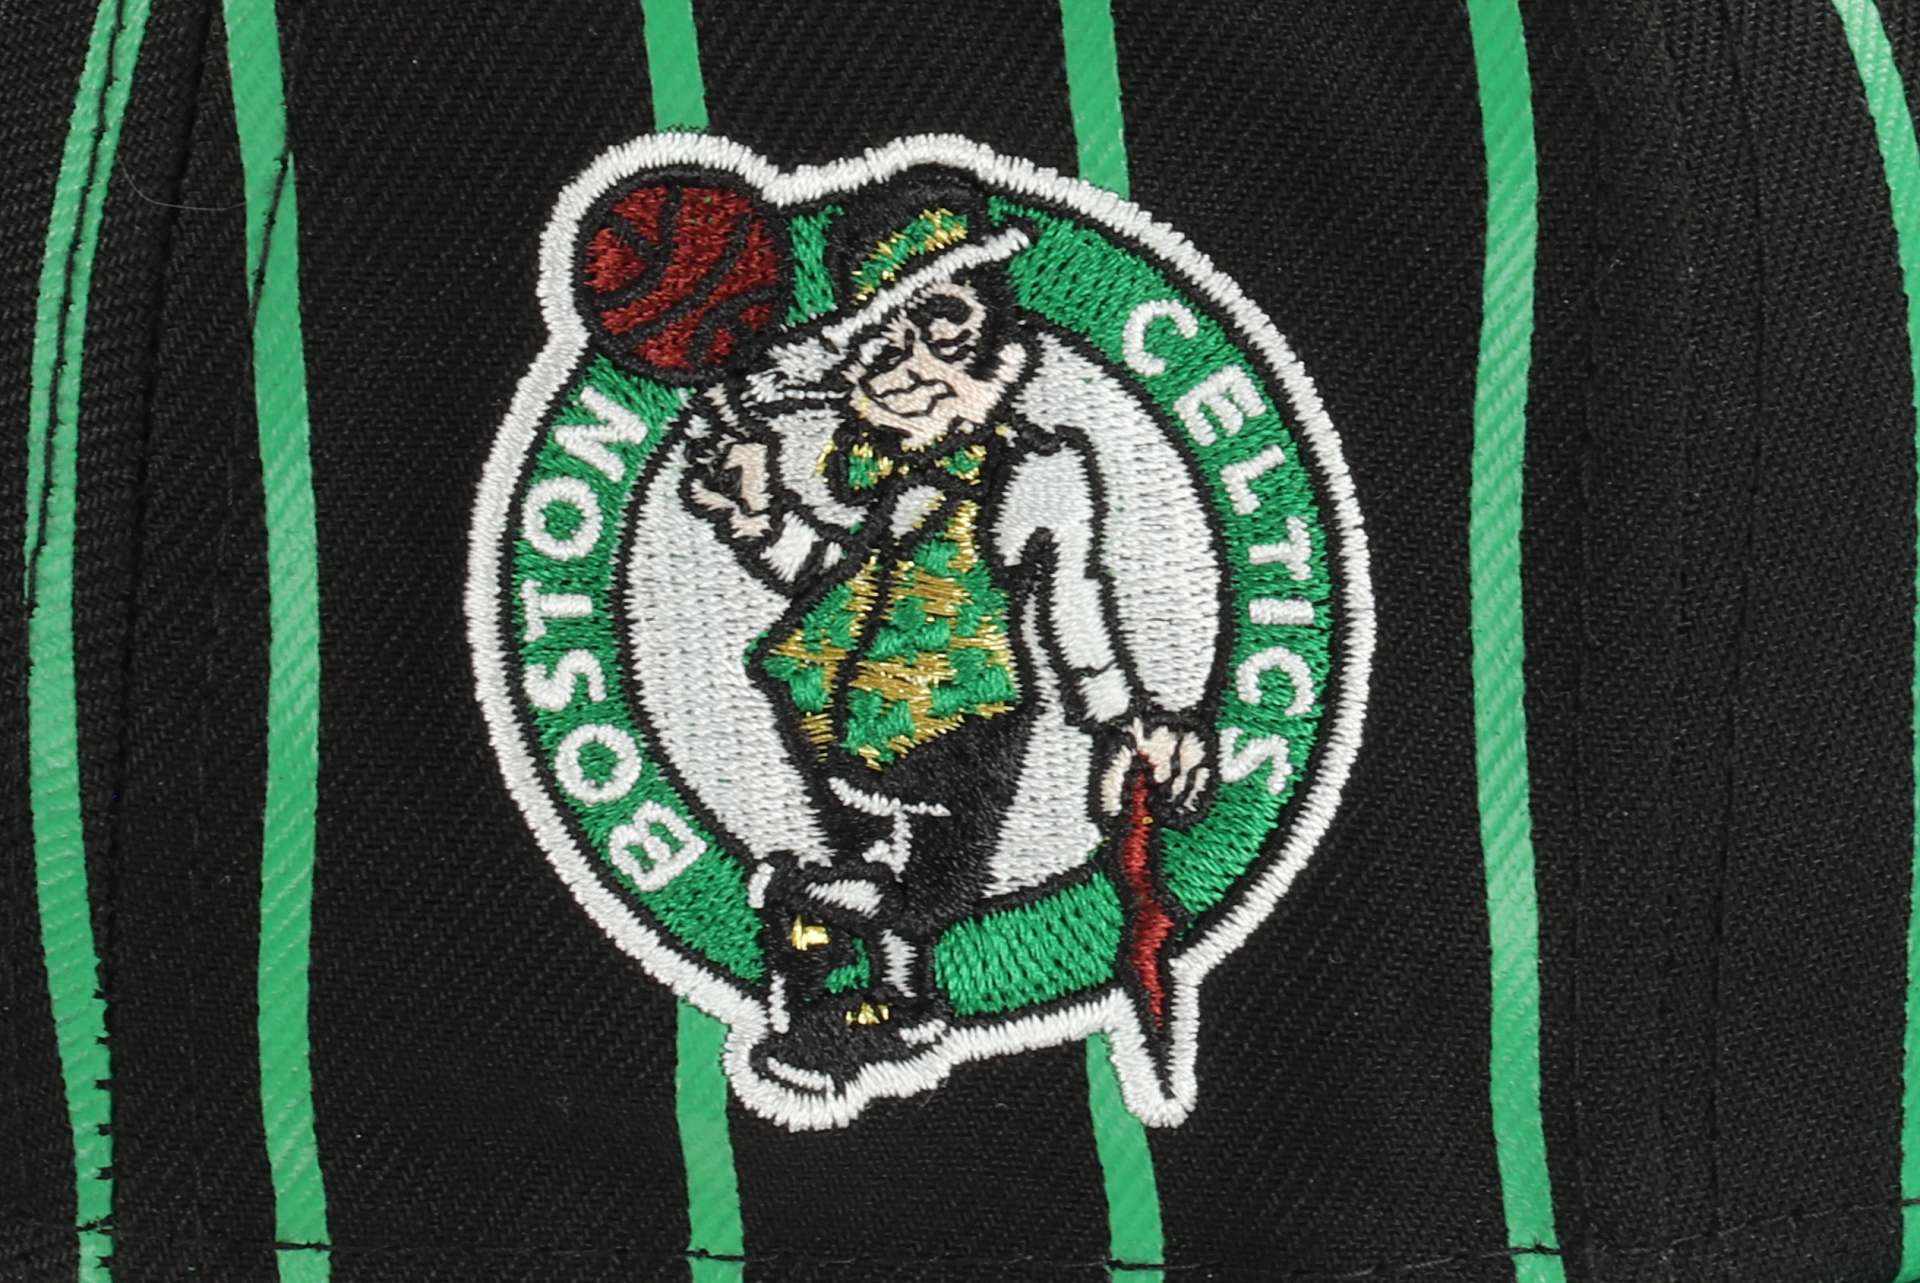 Boston Celtics City Arch Black 9Fifty Snapback Cap New Era